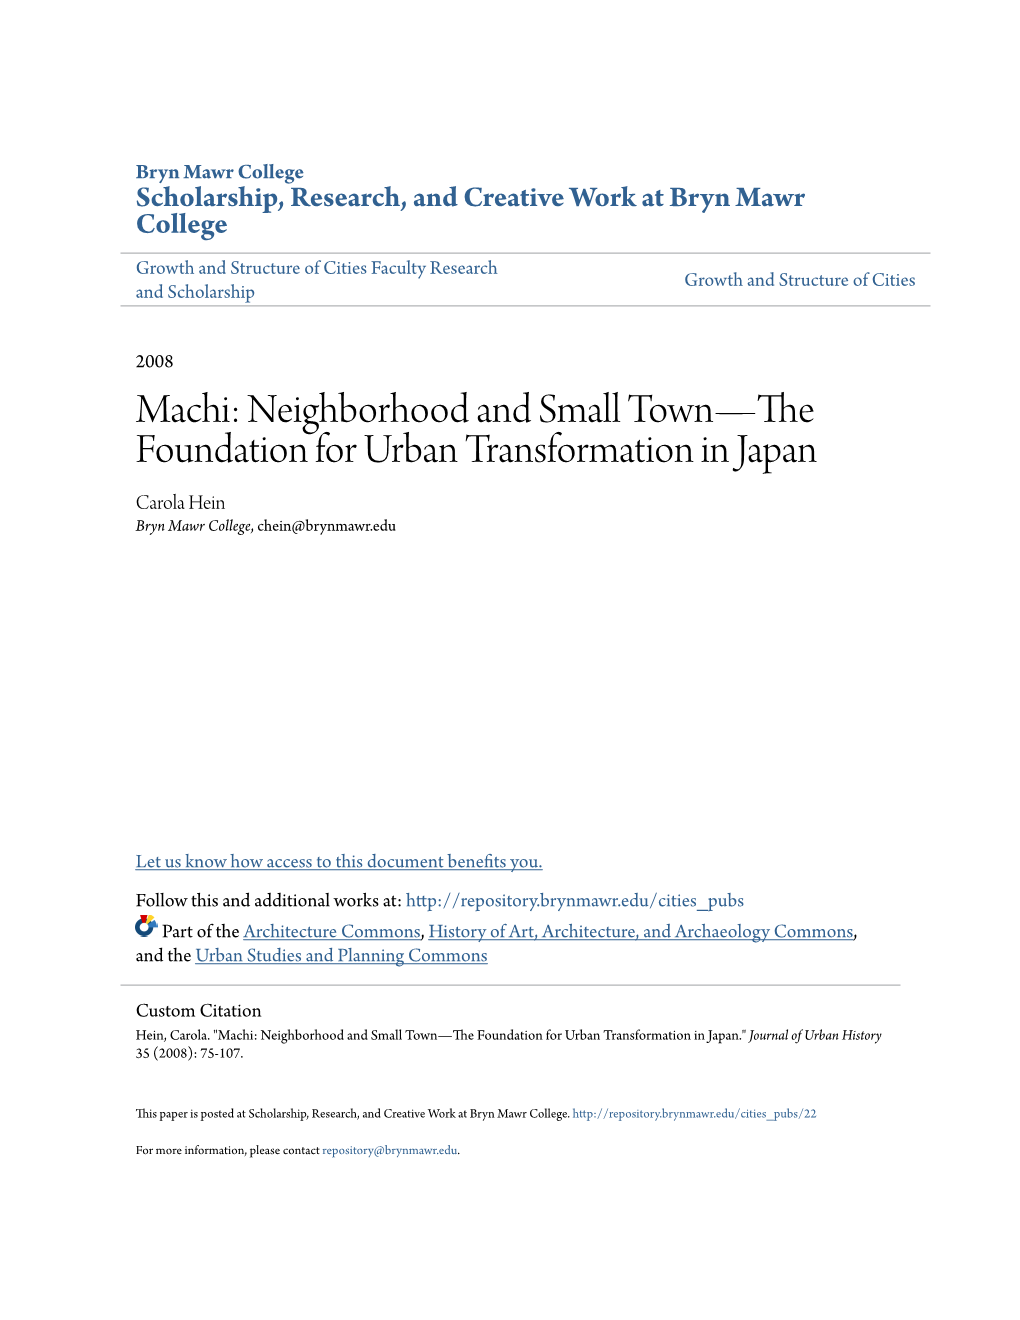 Machi: Neighborhood and Small Townâ•ﬂthe Foundation for Urban